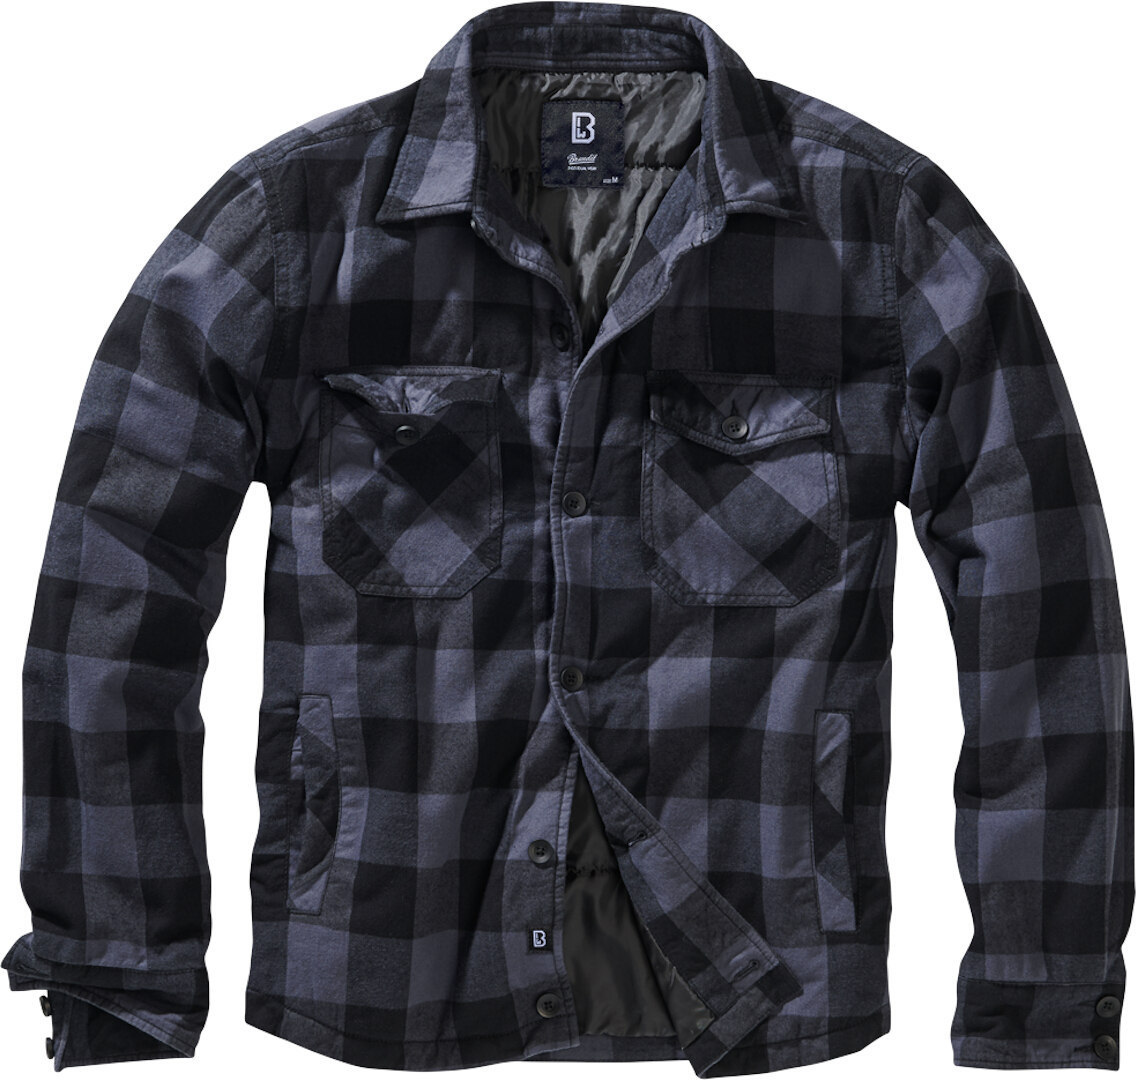 Brandit Lumber Jacke, schwarz-grau, Größe M